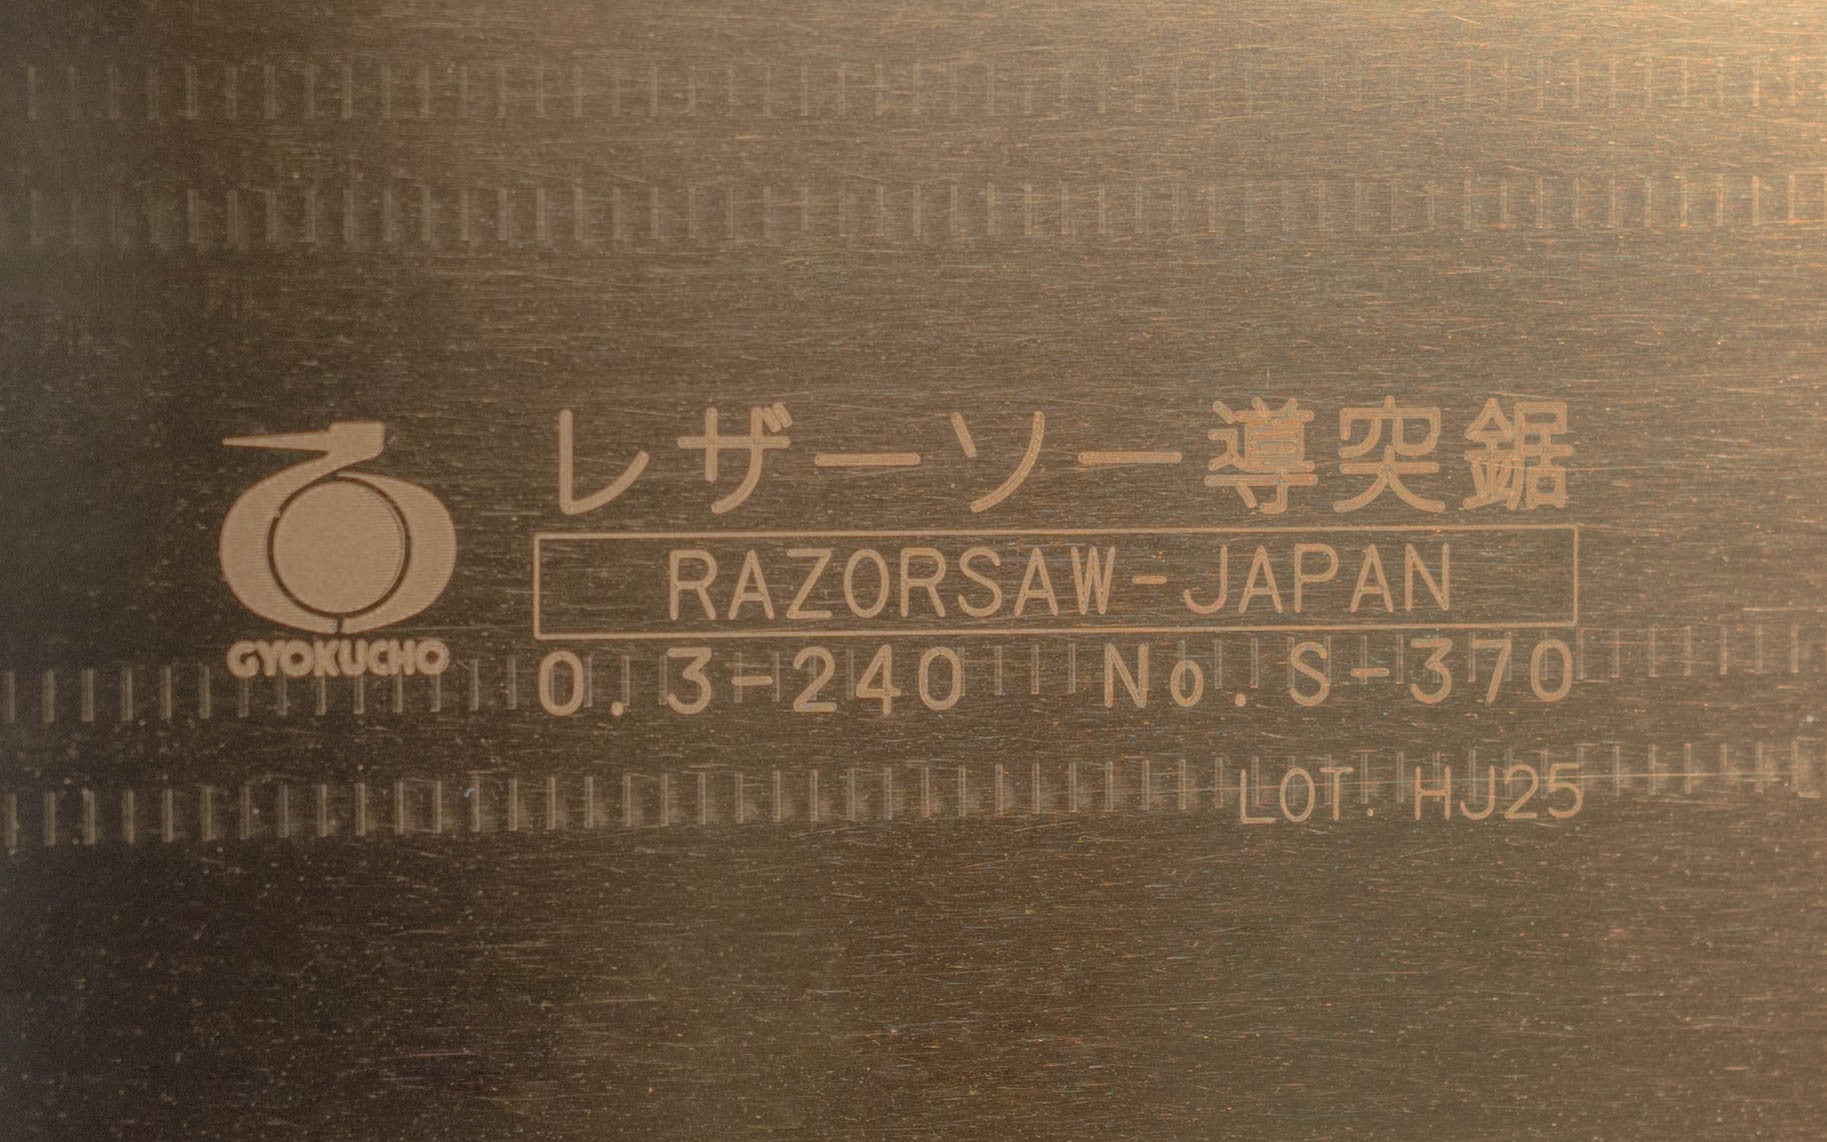 Replacement Blade for Japanese Gyokucho Dozuki Fine Razorsaw 240 mm